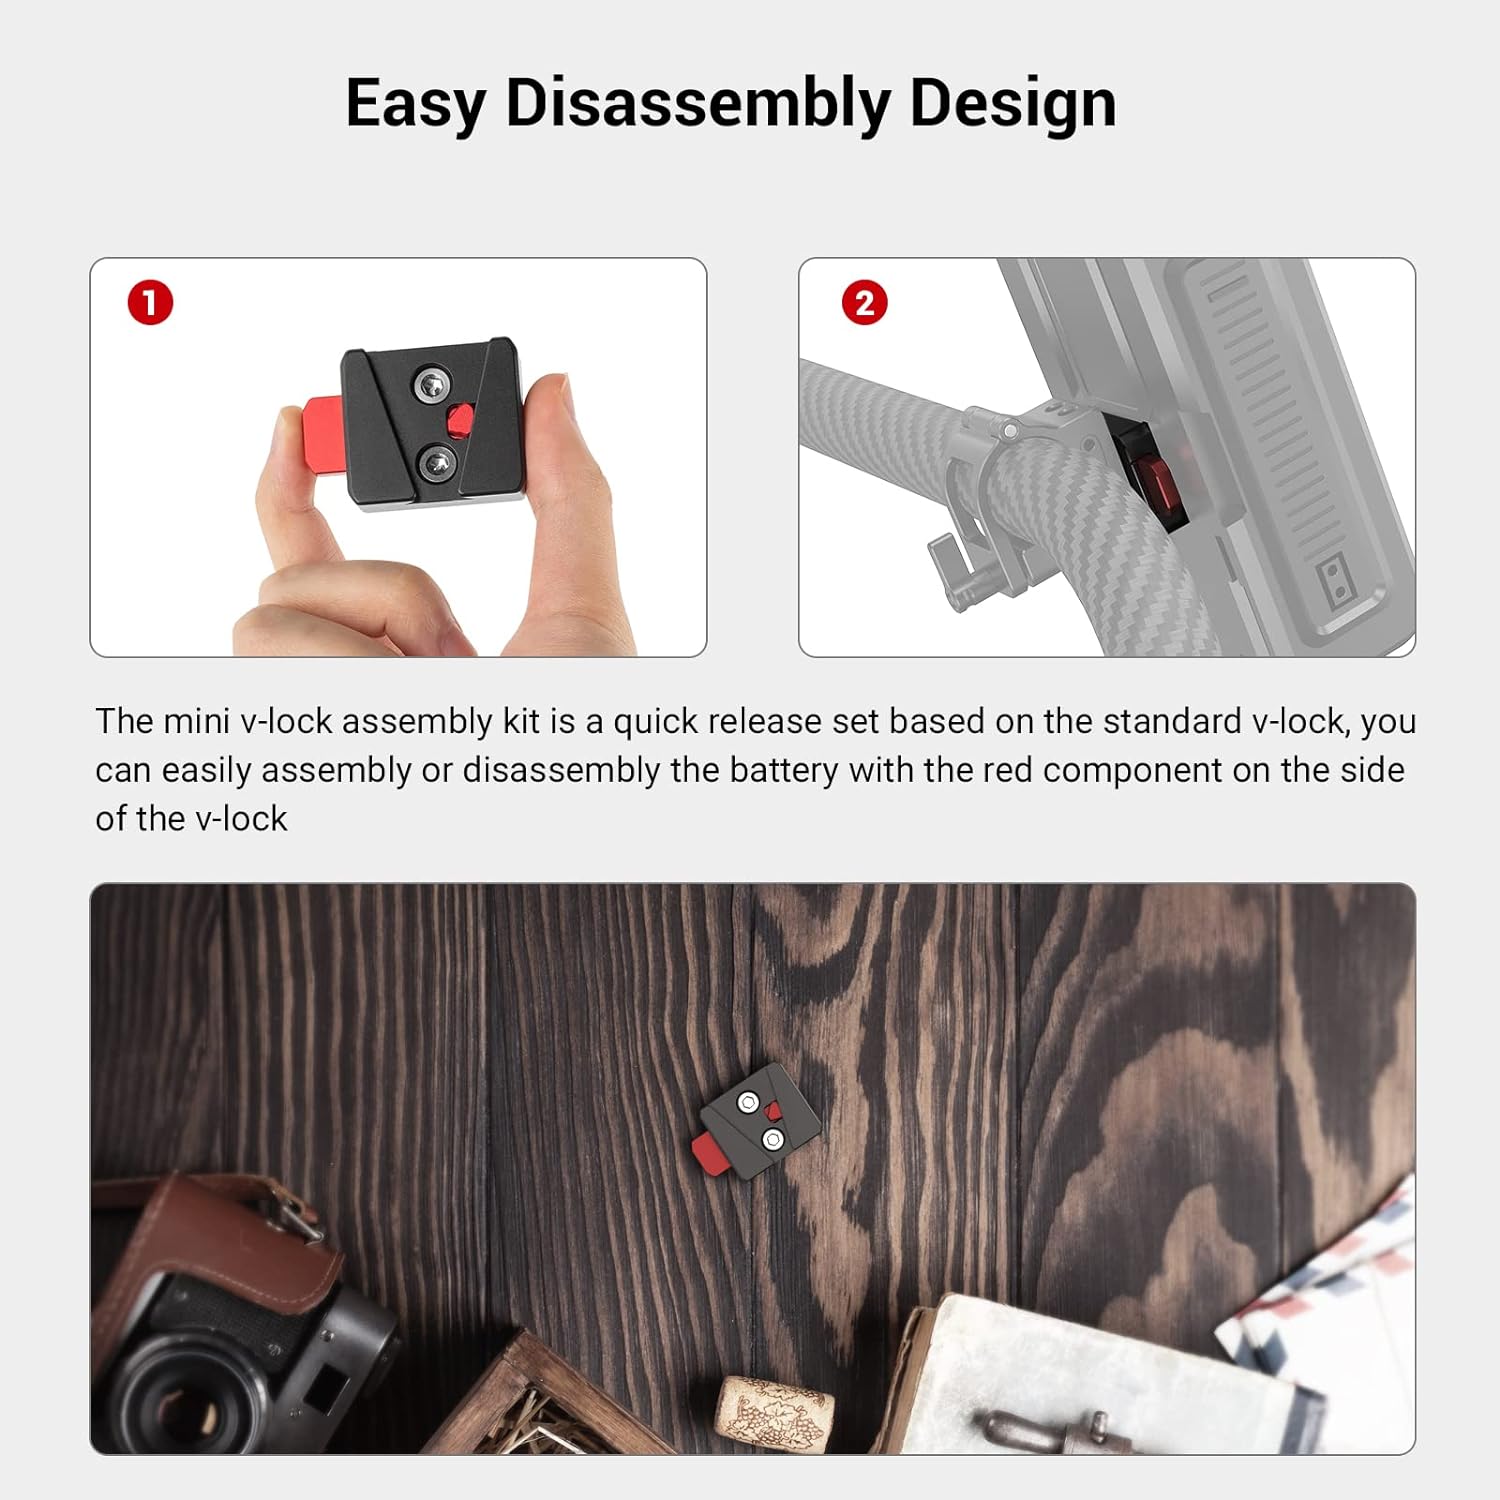 SMALLRIG Mini V-Lock Assembly Kit?- MD2801